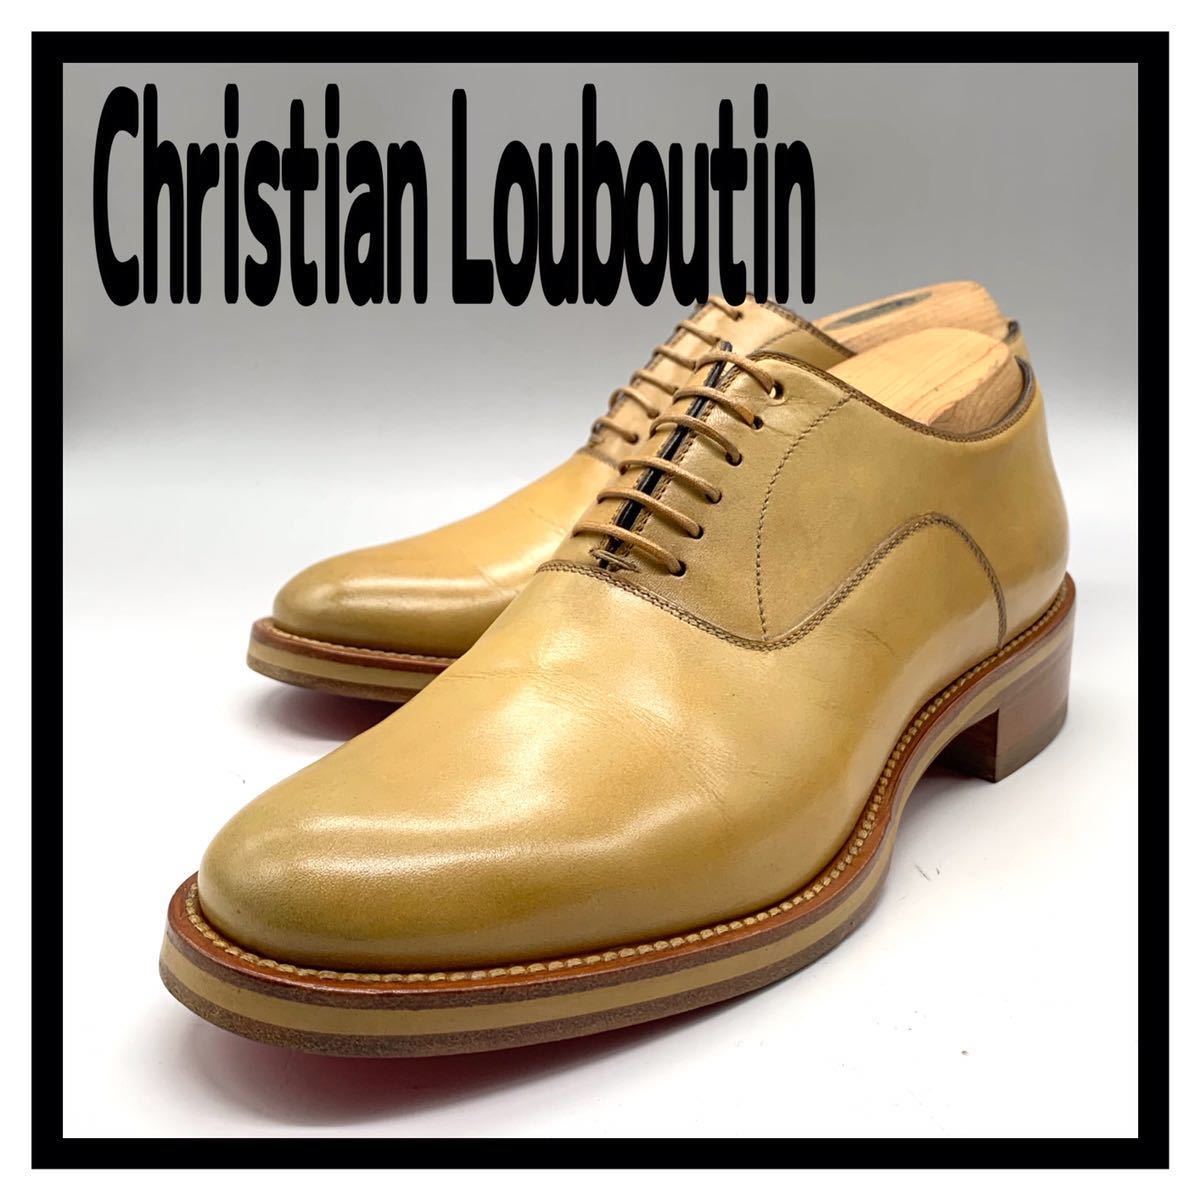 Christian Louboutin (クリスチャン ルブタン) ドレスシューズ プレーントゥ レザー イエロー ベージュ 40 25cm 革靴 イタリア製 メンズ